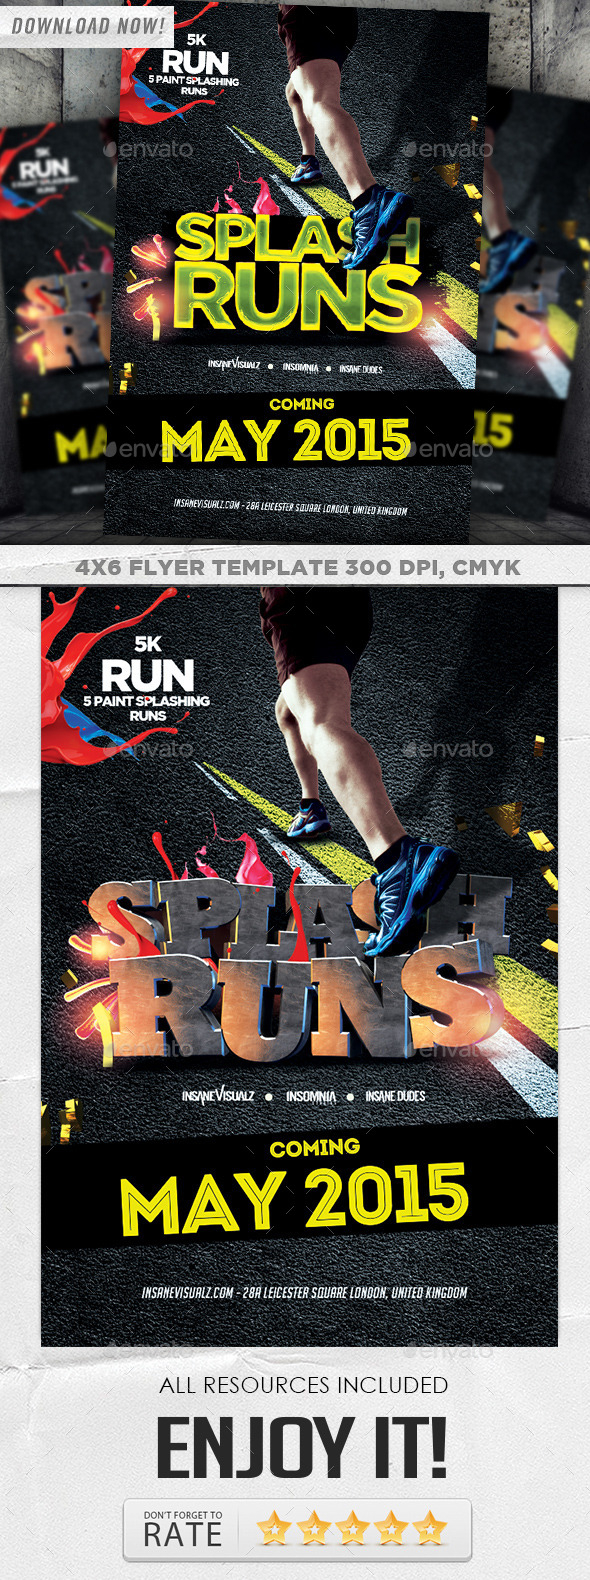 Run Flyer Graphics, Designs & Templates from GraphicRiver With 5K Run Flyer Template Regarding 5K Run Flyer Template